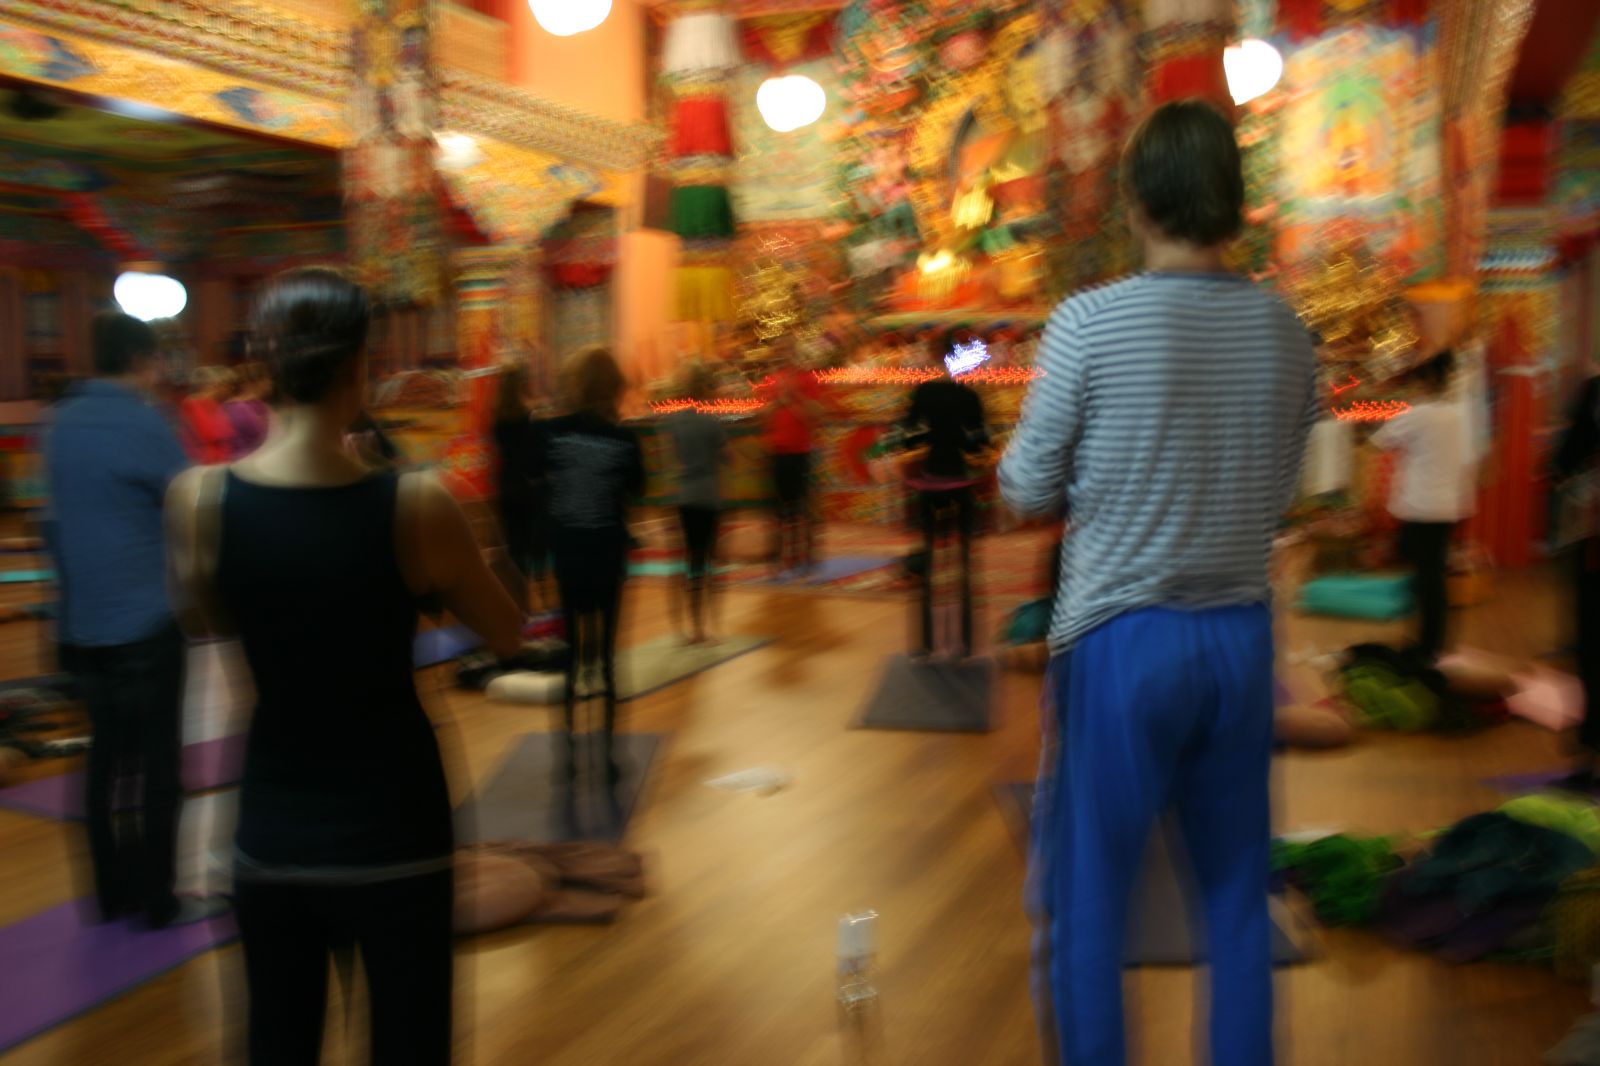 Yoga & Mindfulness retraite september 2014 Huy Belgie